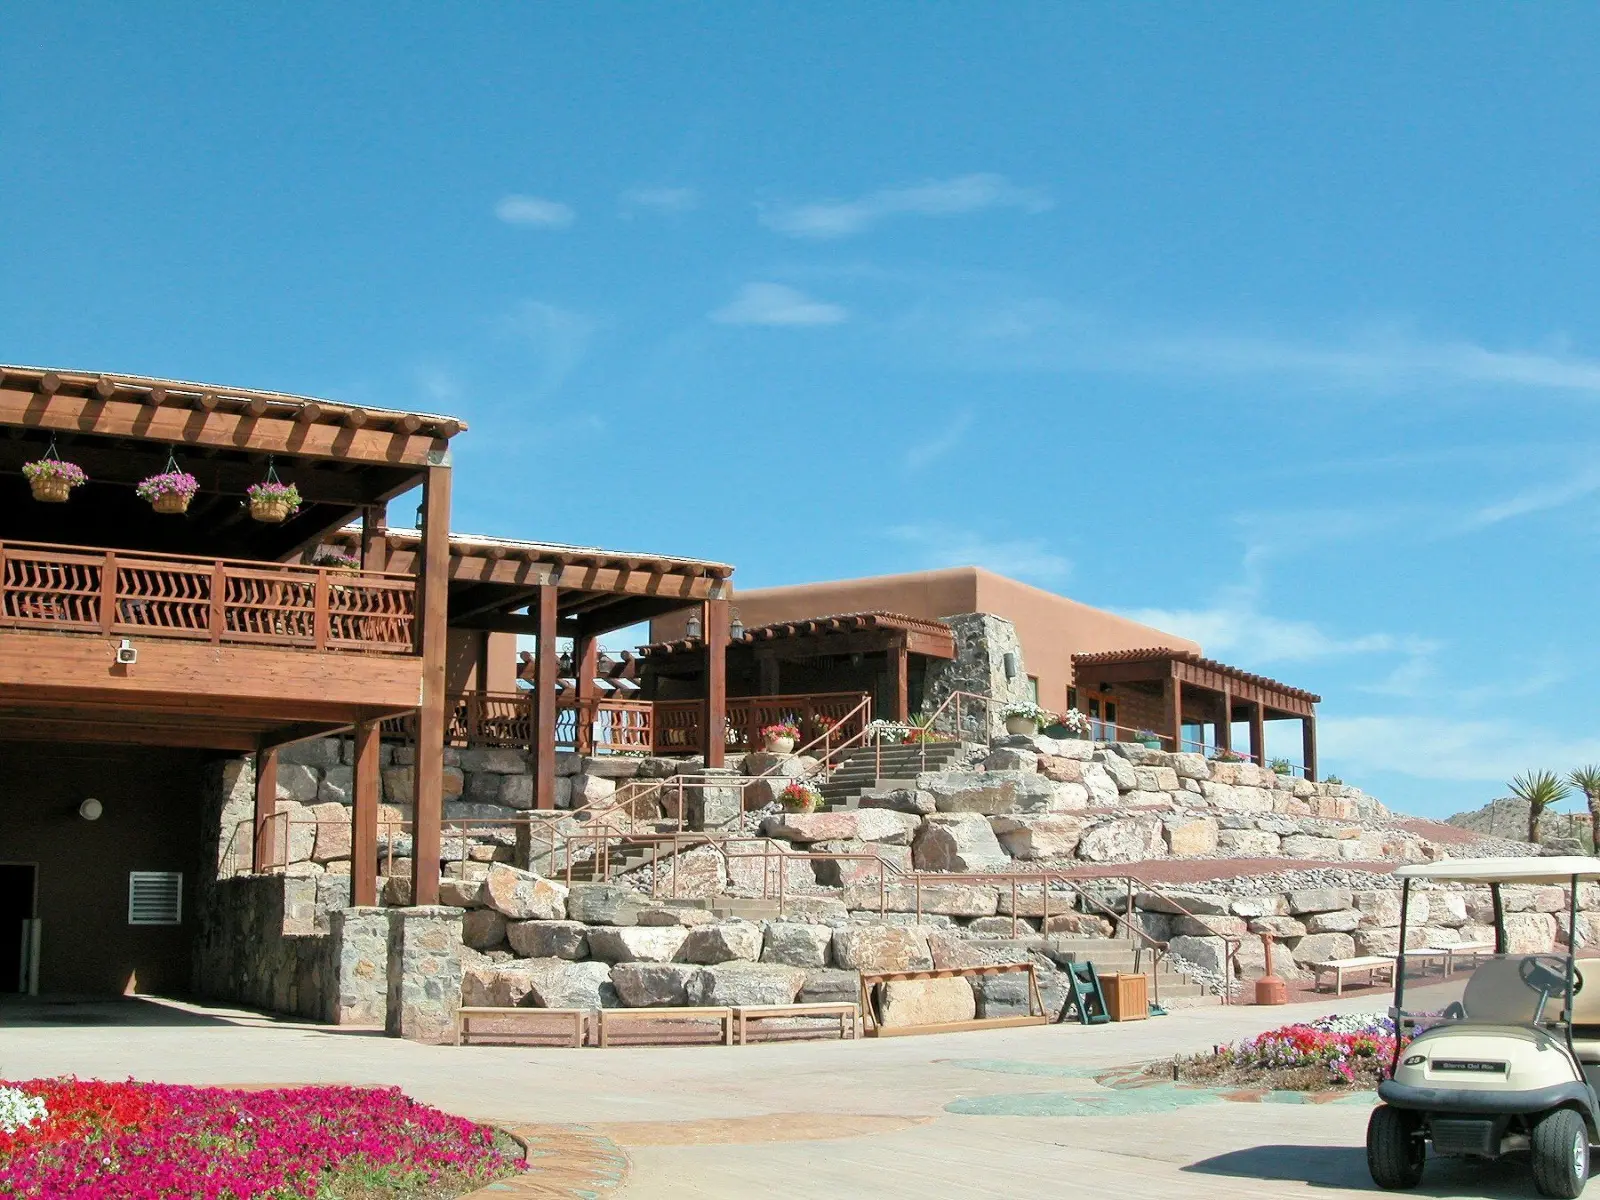 turtleback mountain resort clubhouse